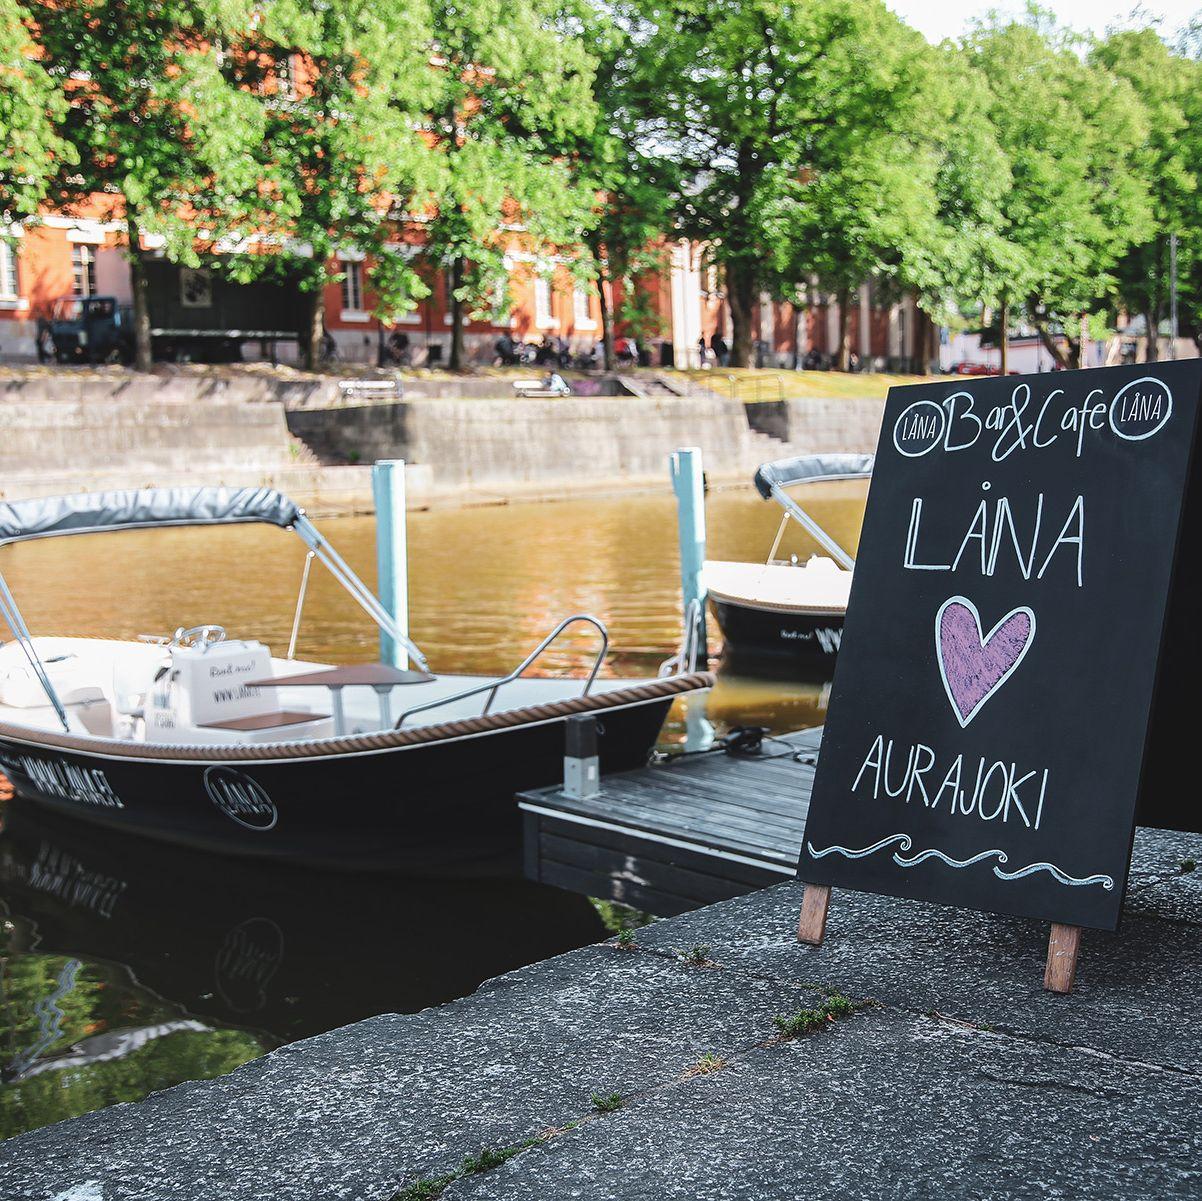 A chalkboard advertising Låna Bar & Café stands beside the Aura River, where Låna boats have been docked.